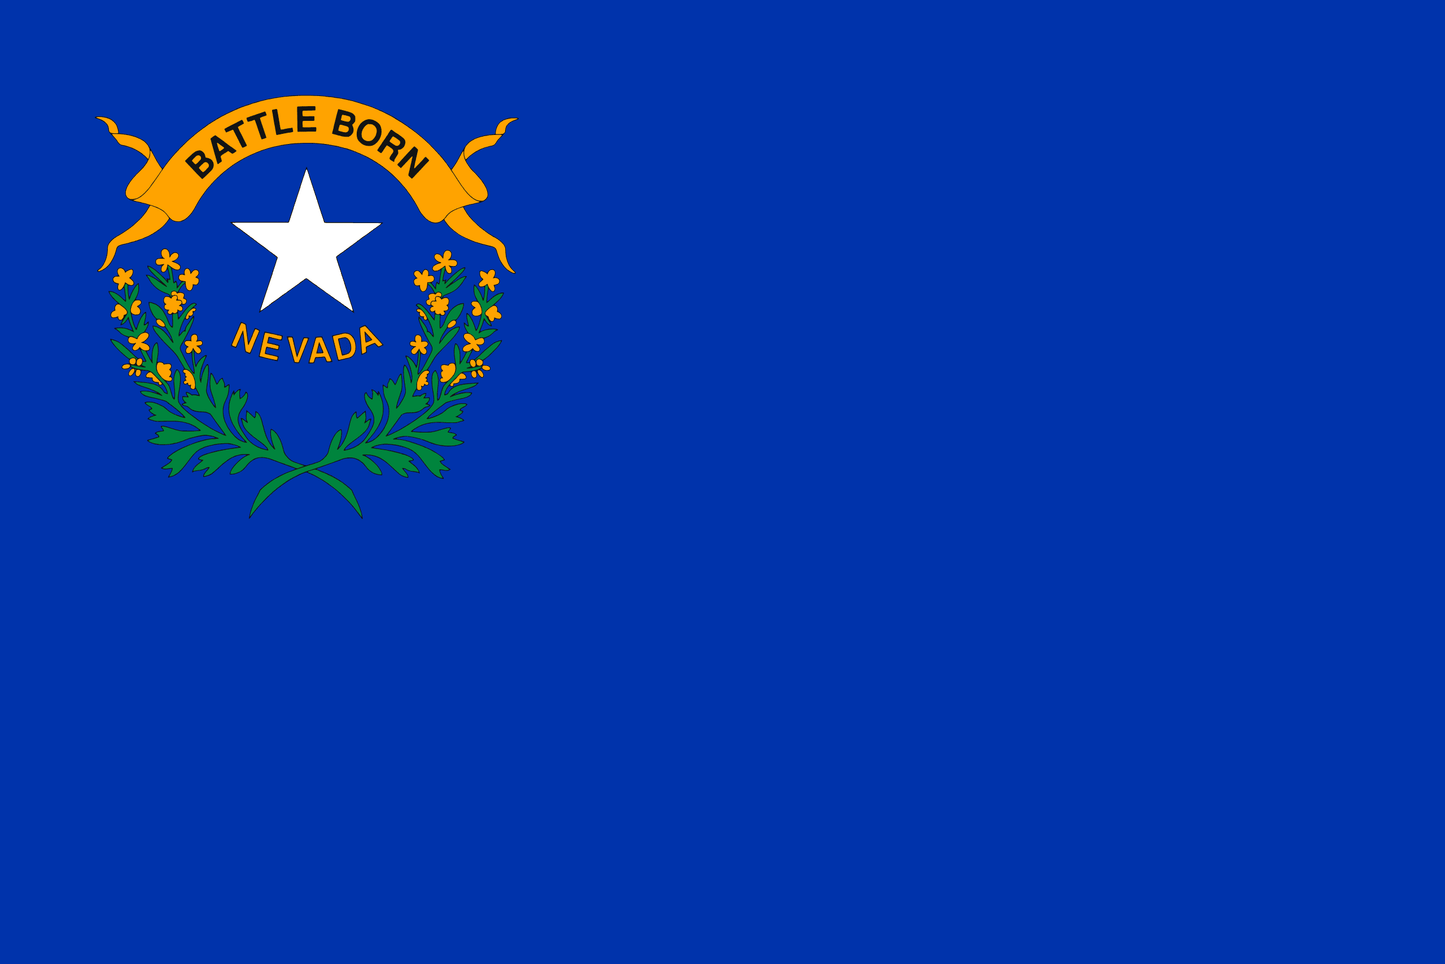 Nevada State Flag - Symonds Flags